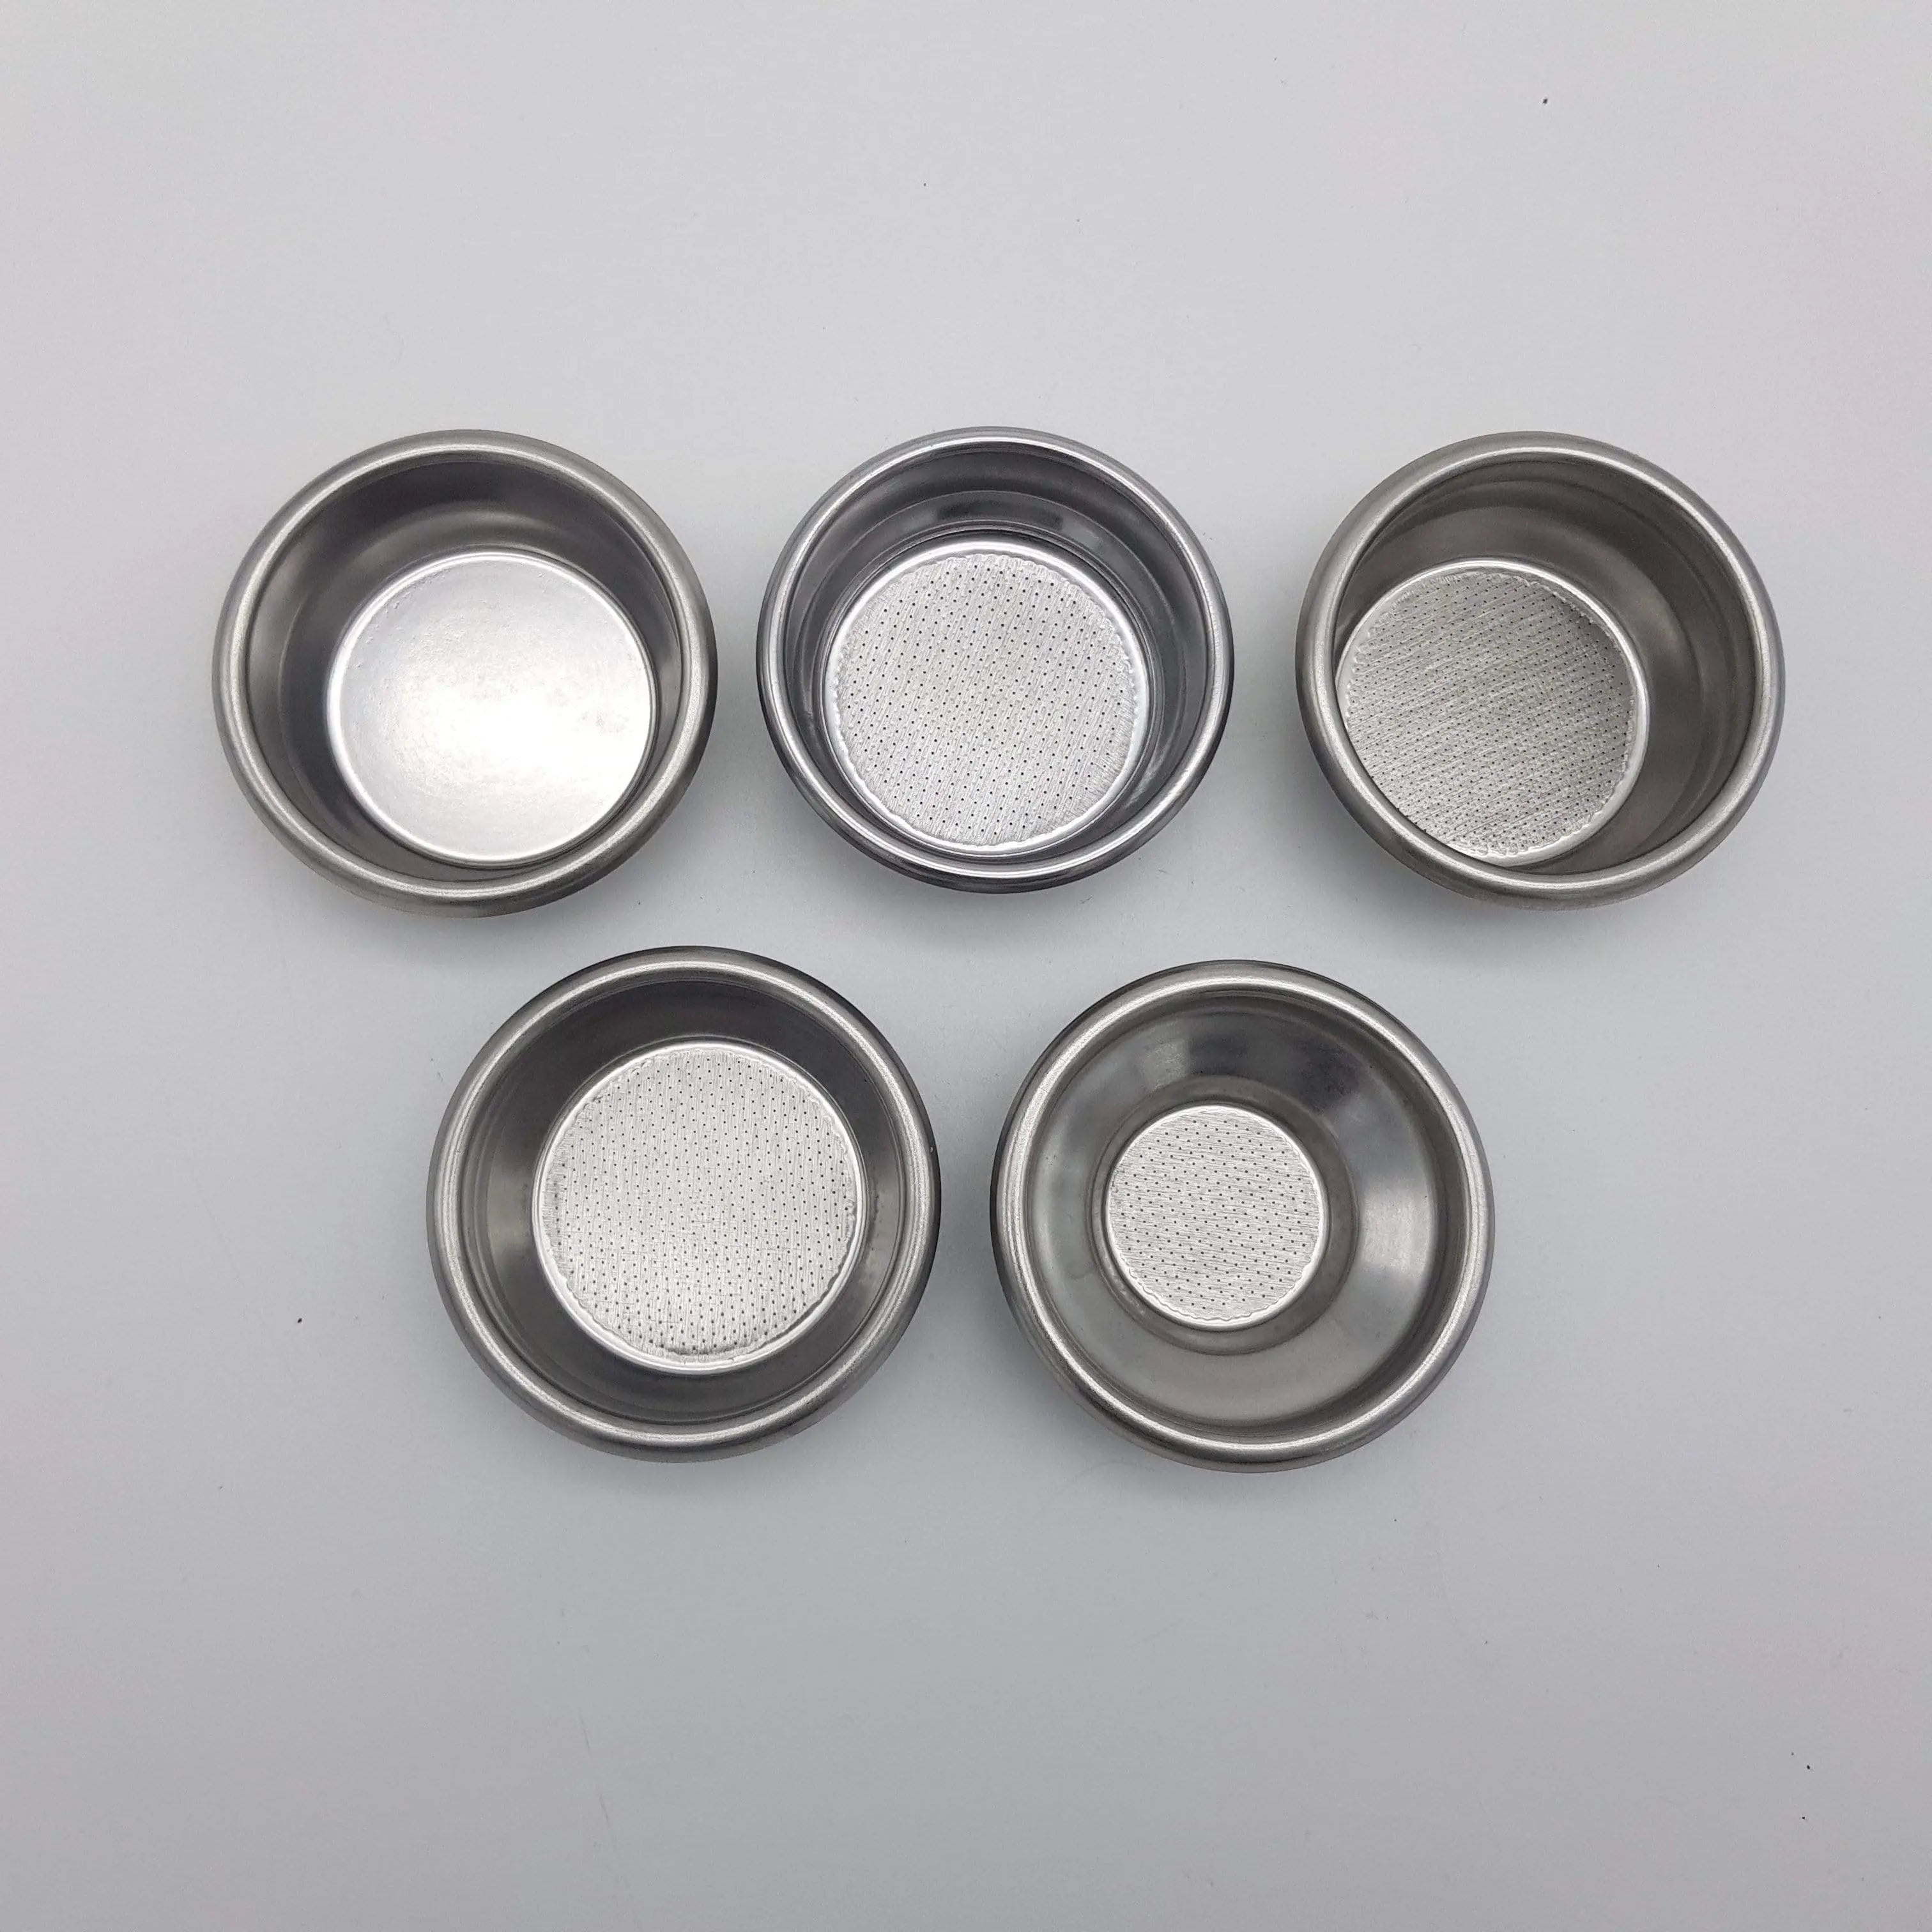 Set completo 5 filtri diametro 58mm per macchine da caffè Llelit LELIT